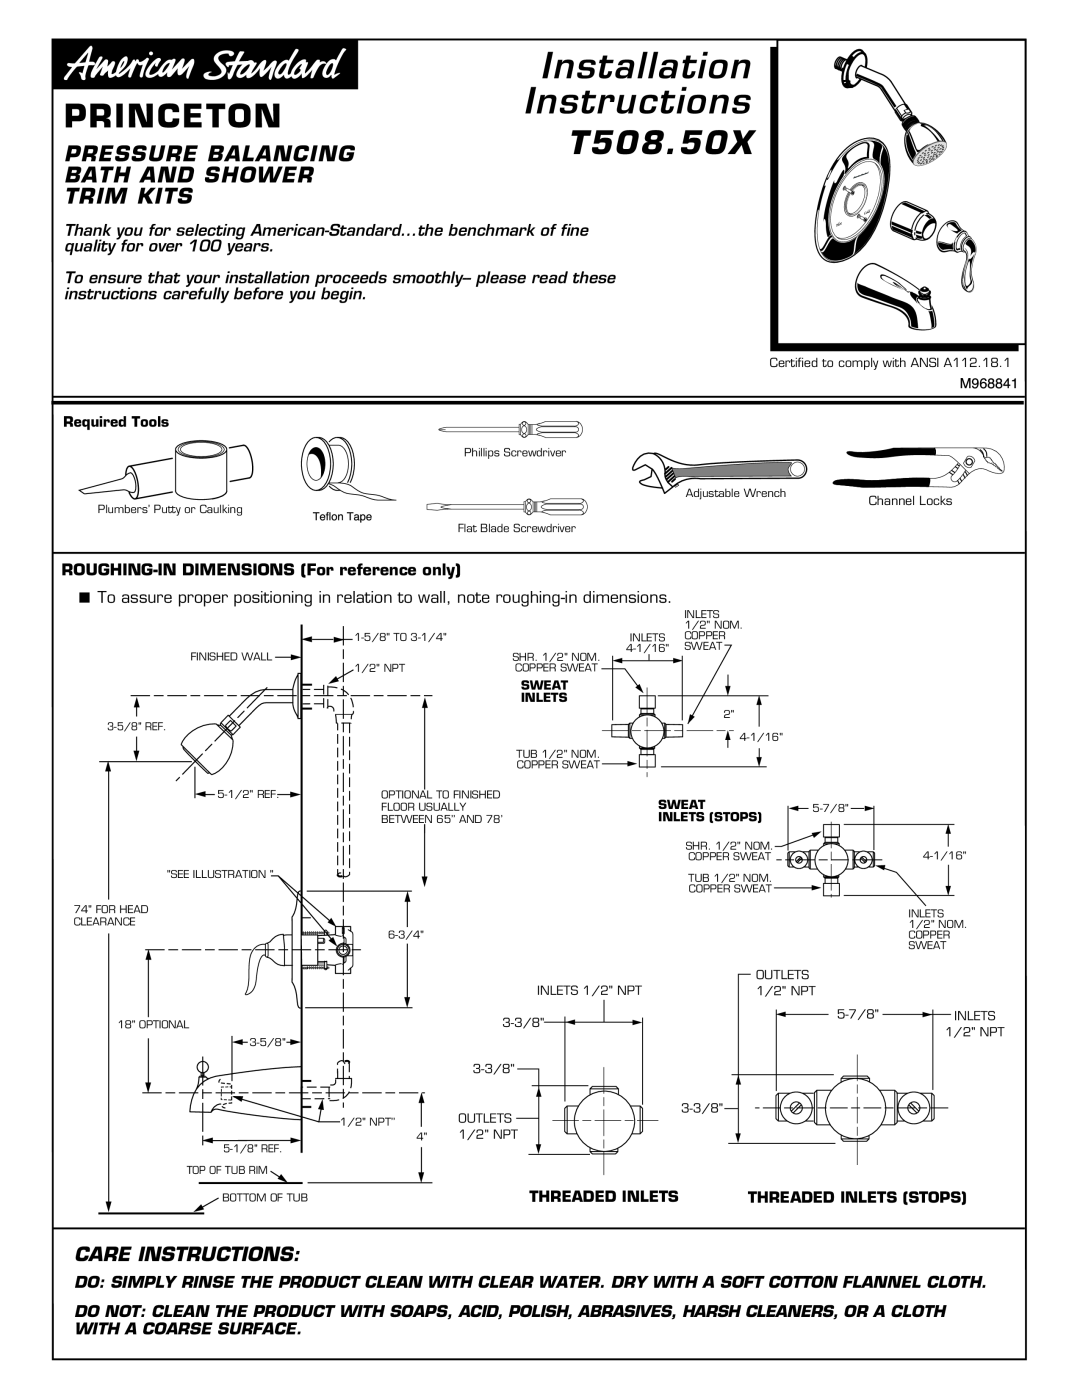 American Standard Pressure Balancing Bath and Shower Trim Kit installation instructions Installation, Instructions 